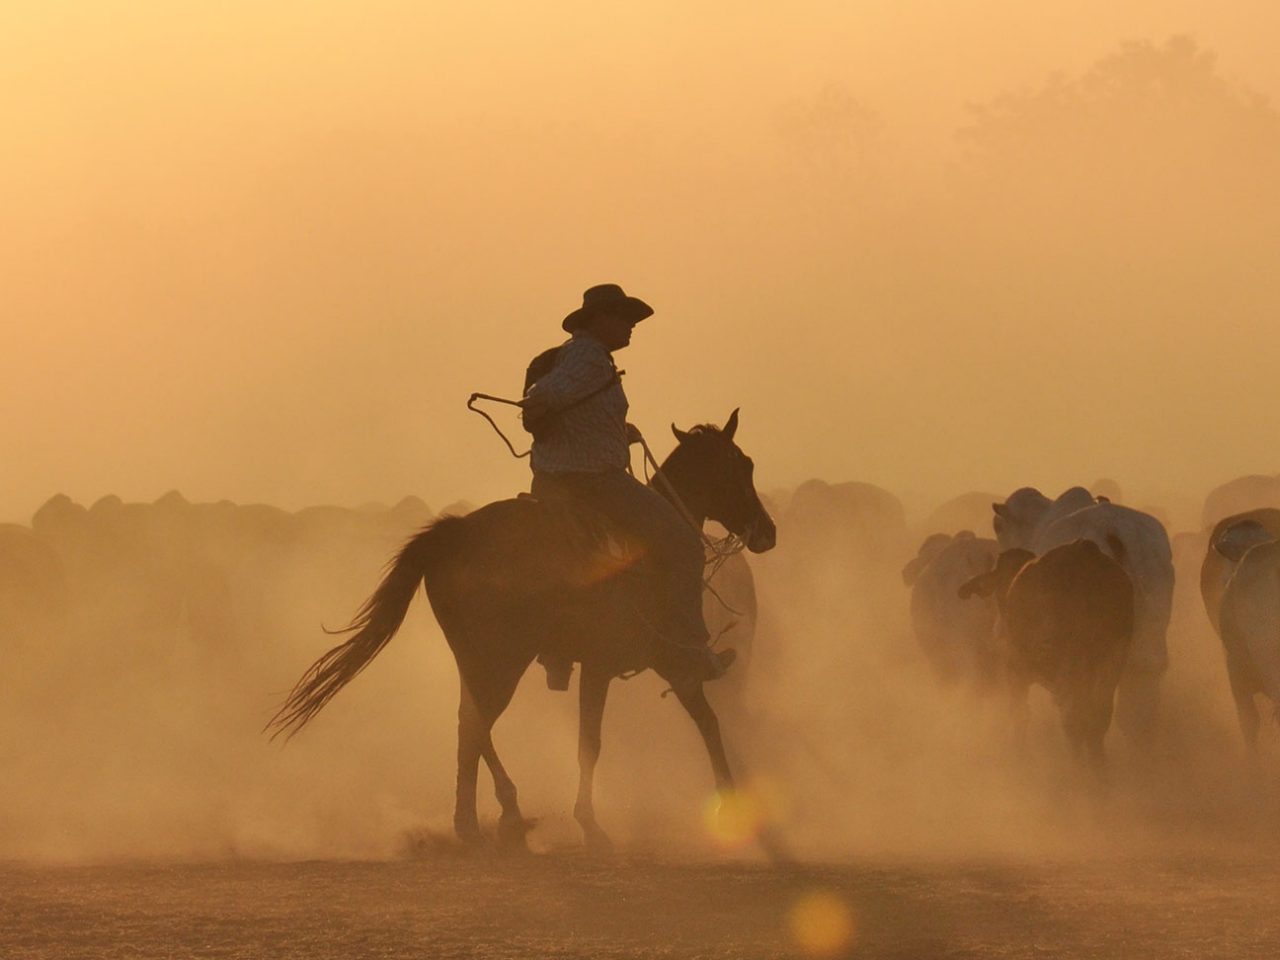 Farmer riding horse at dusk